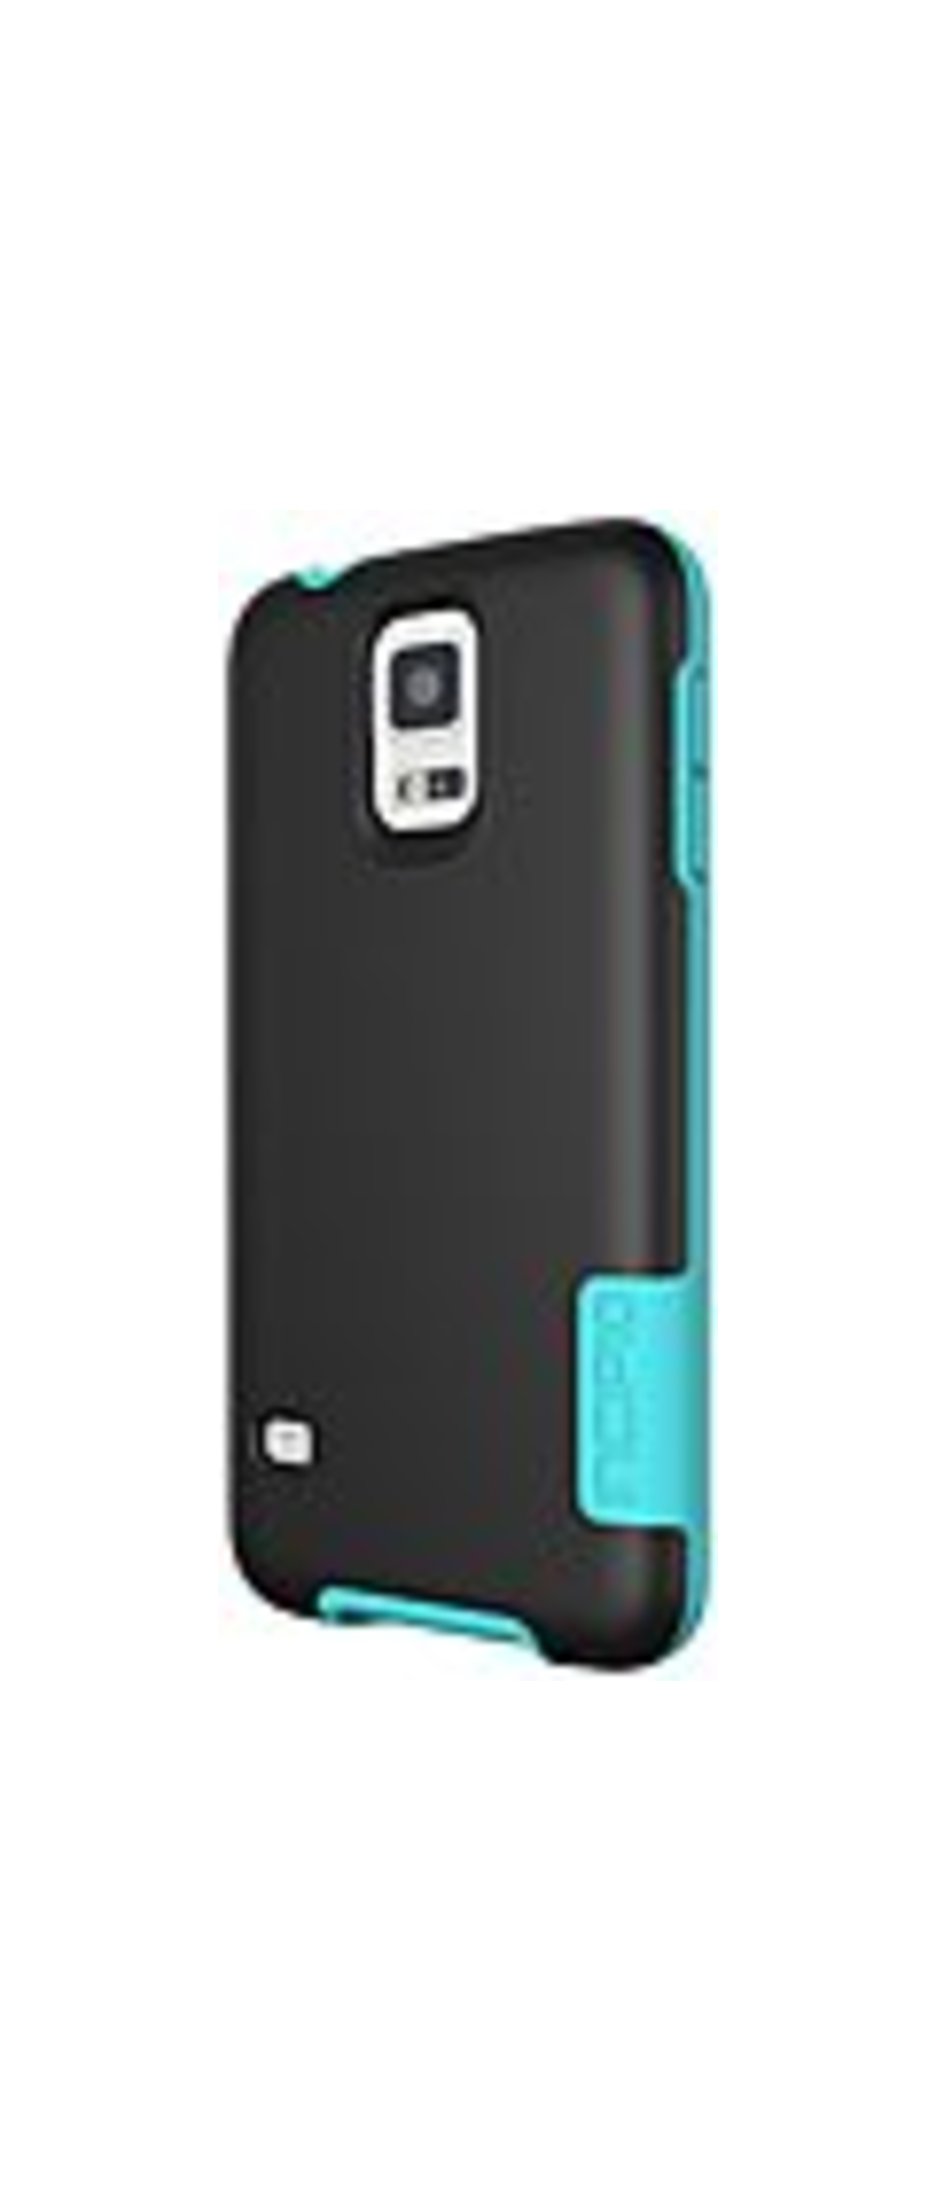 Incipio OVRMLD Case for Samsung Galaxy S5 - Black/Turquoise - SA-531-BLK - Flexible Hard-Shell - Plextonium, Next Generation Polymer